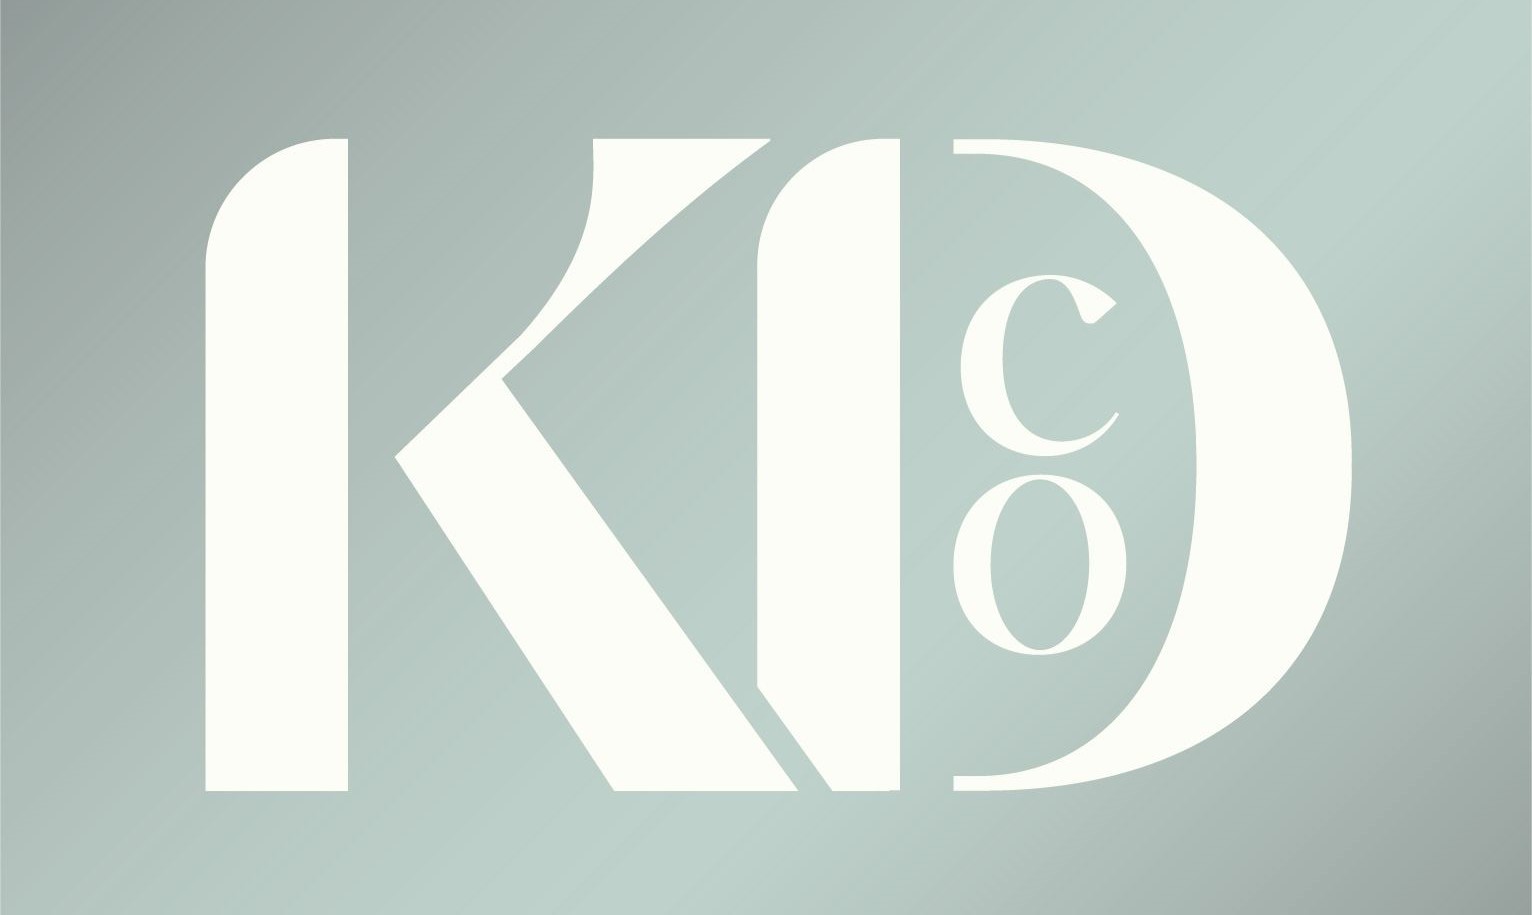 Kynd Design Co. : Brand Short Description Type Here.